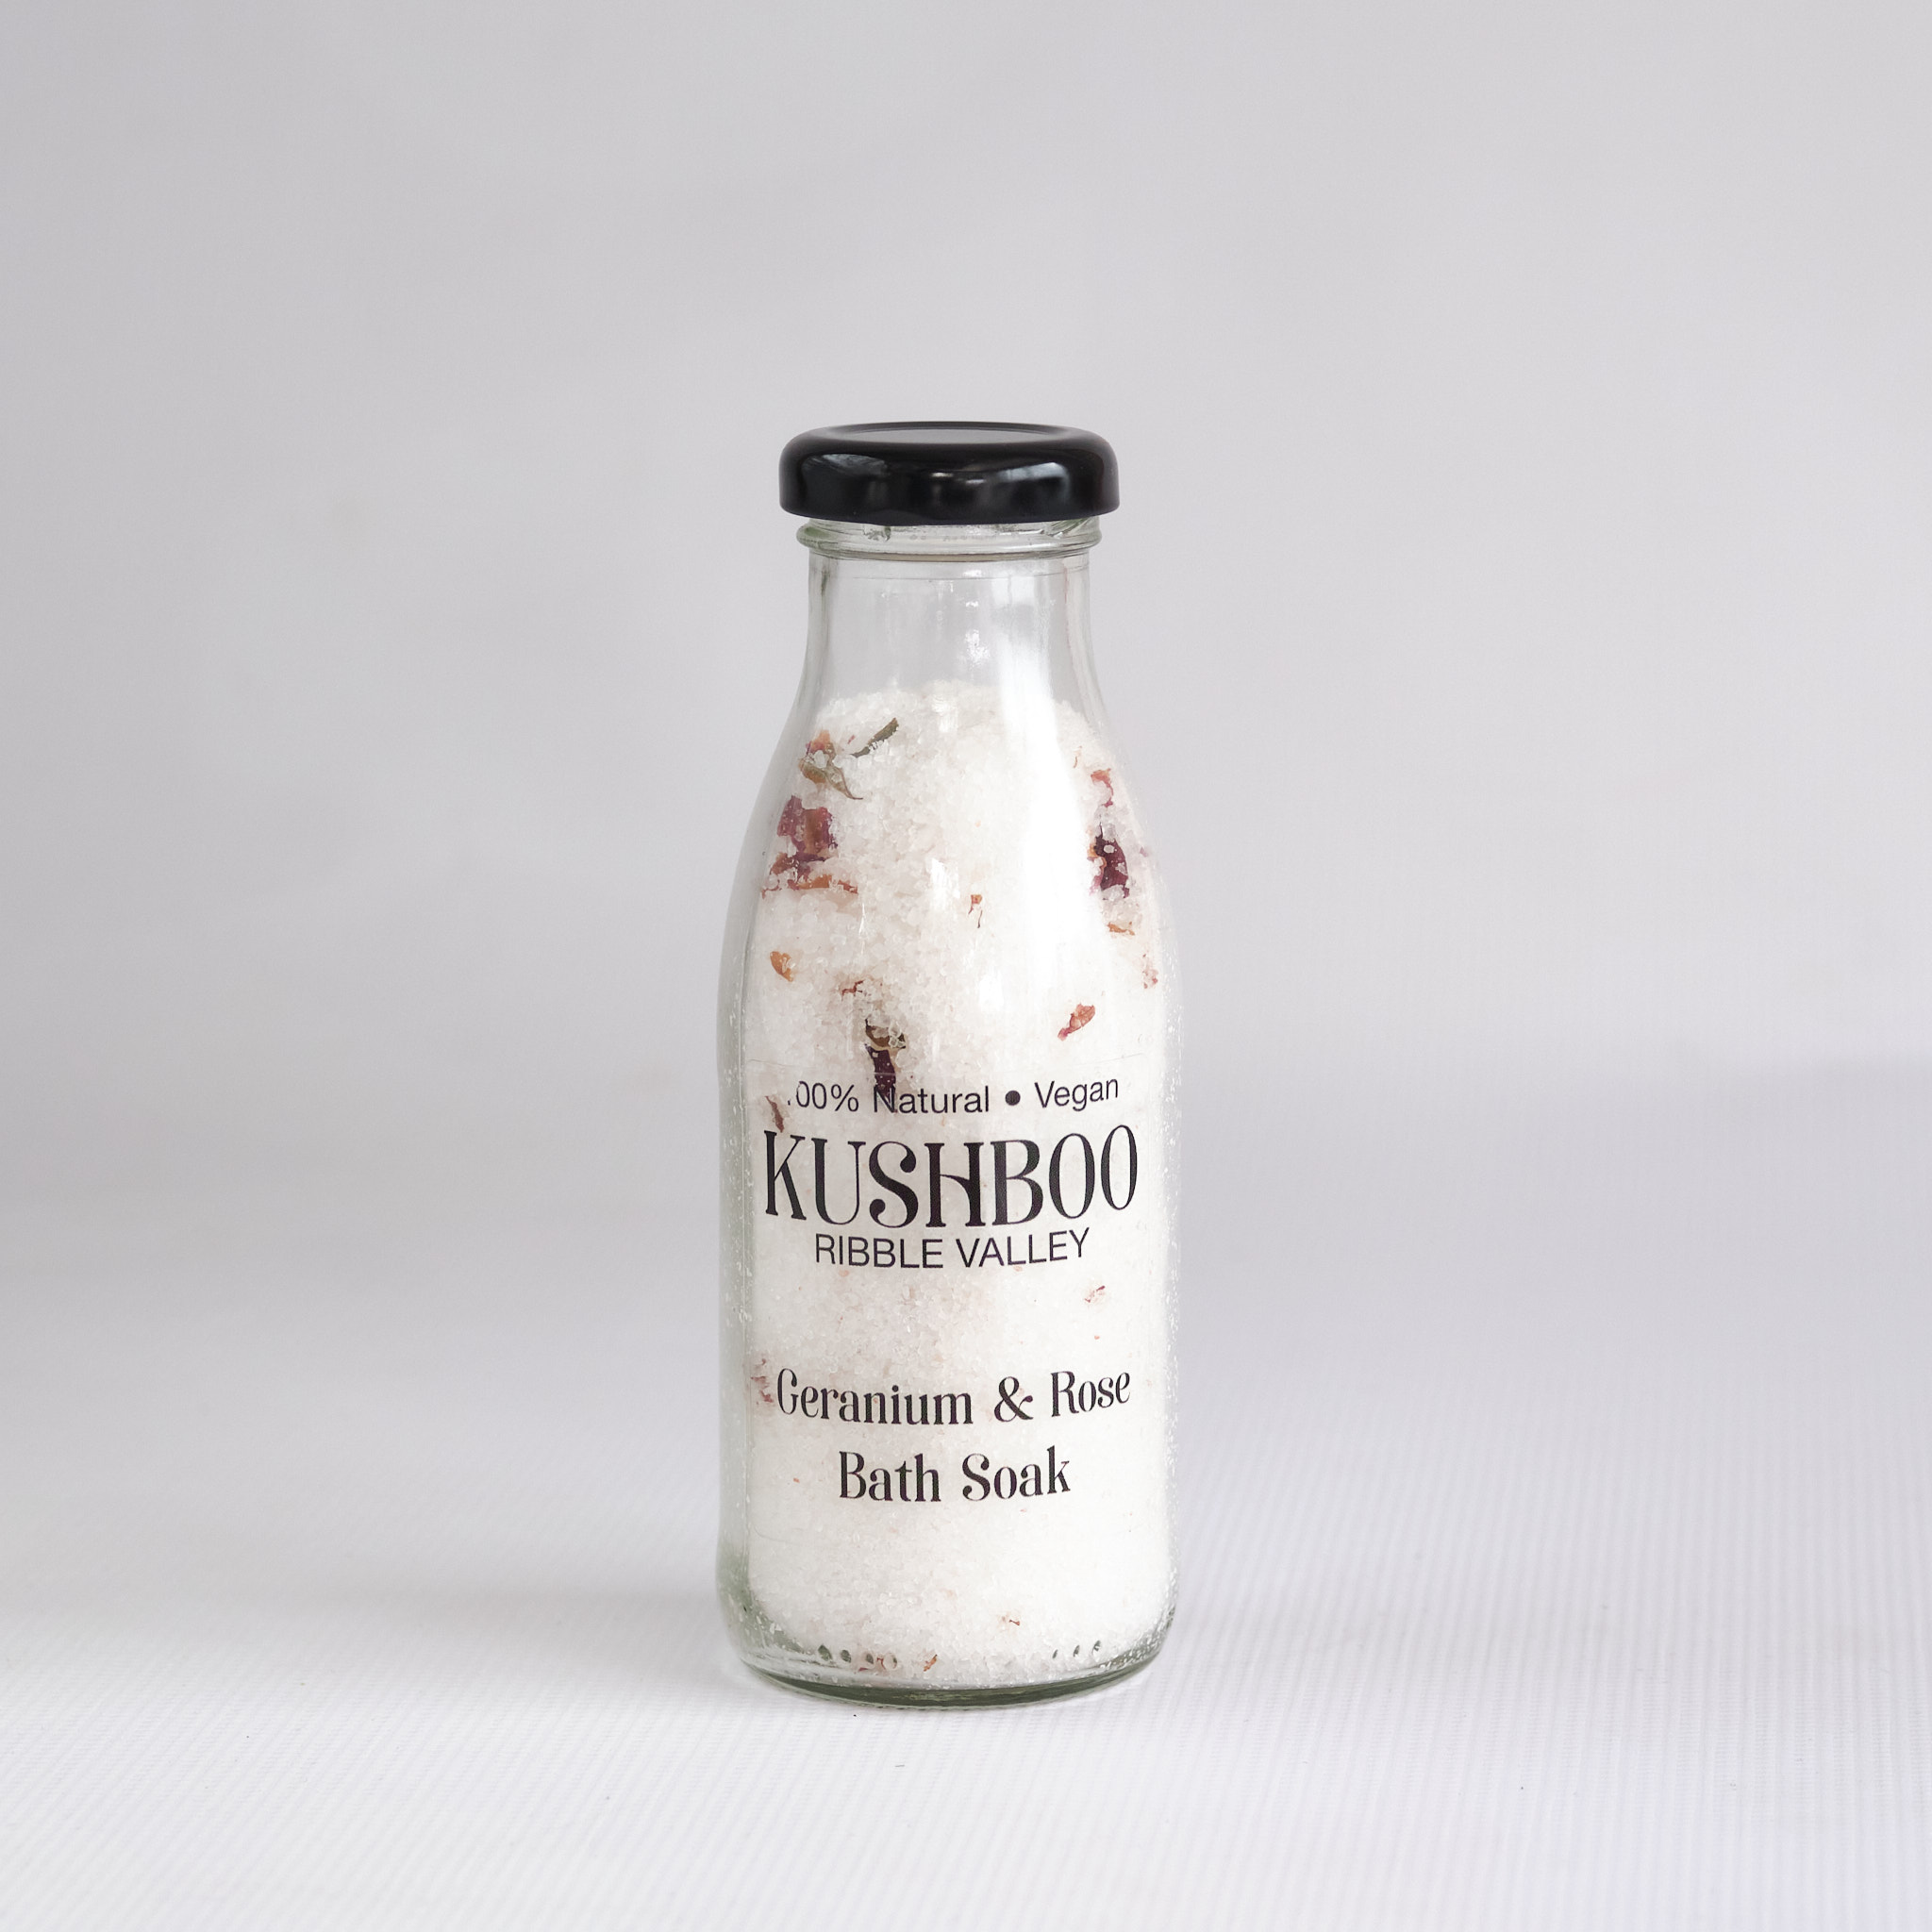 Kushboo 100% Natural Handmade Bath Salts